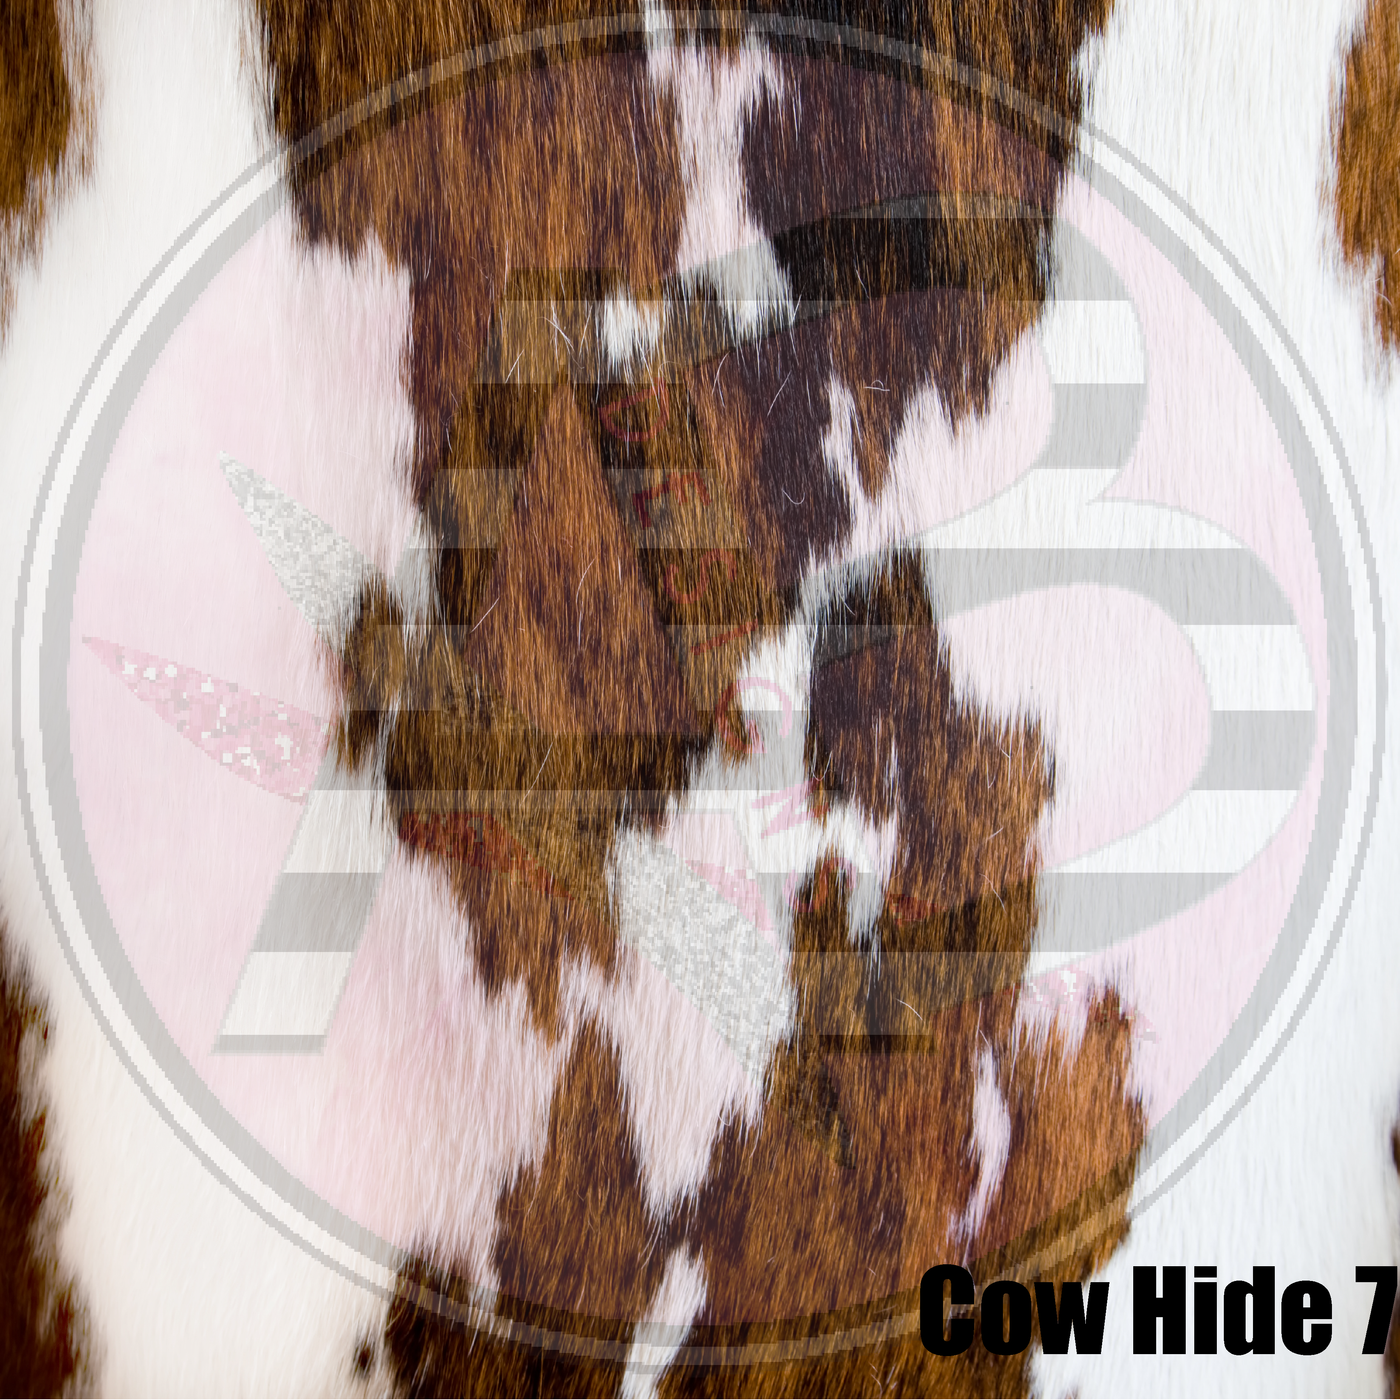 Adhesive Patterned Vinyl - Cow Hide 7